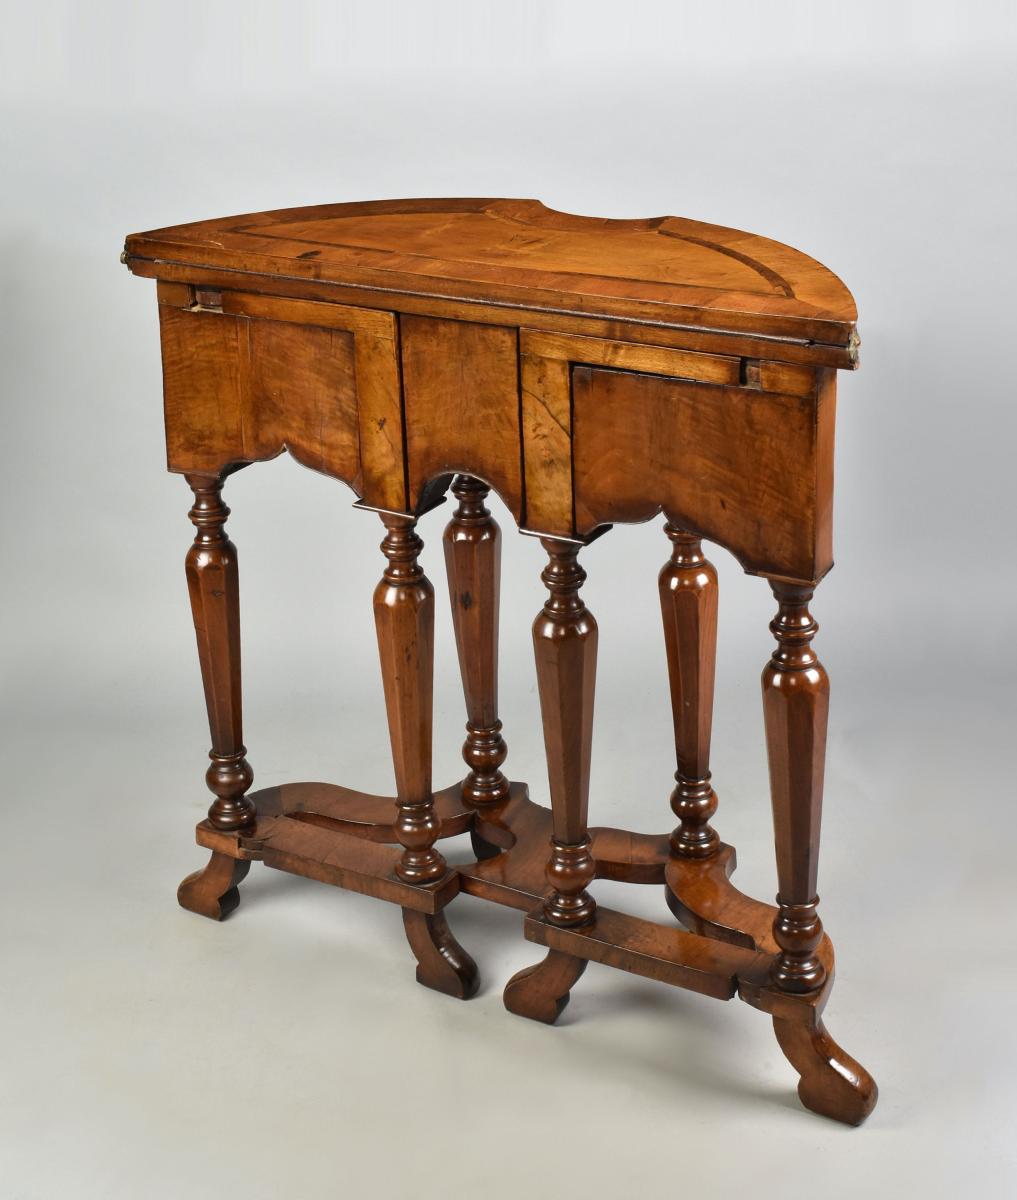 A rare diminutive Queen Anne walnut gateleg table, c.1710